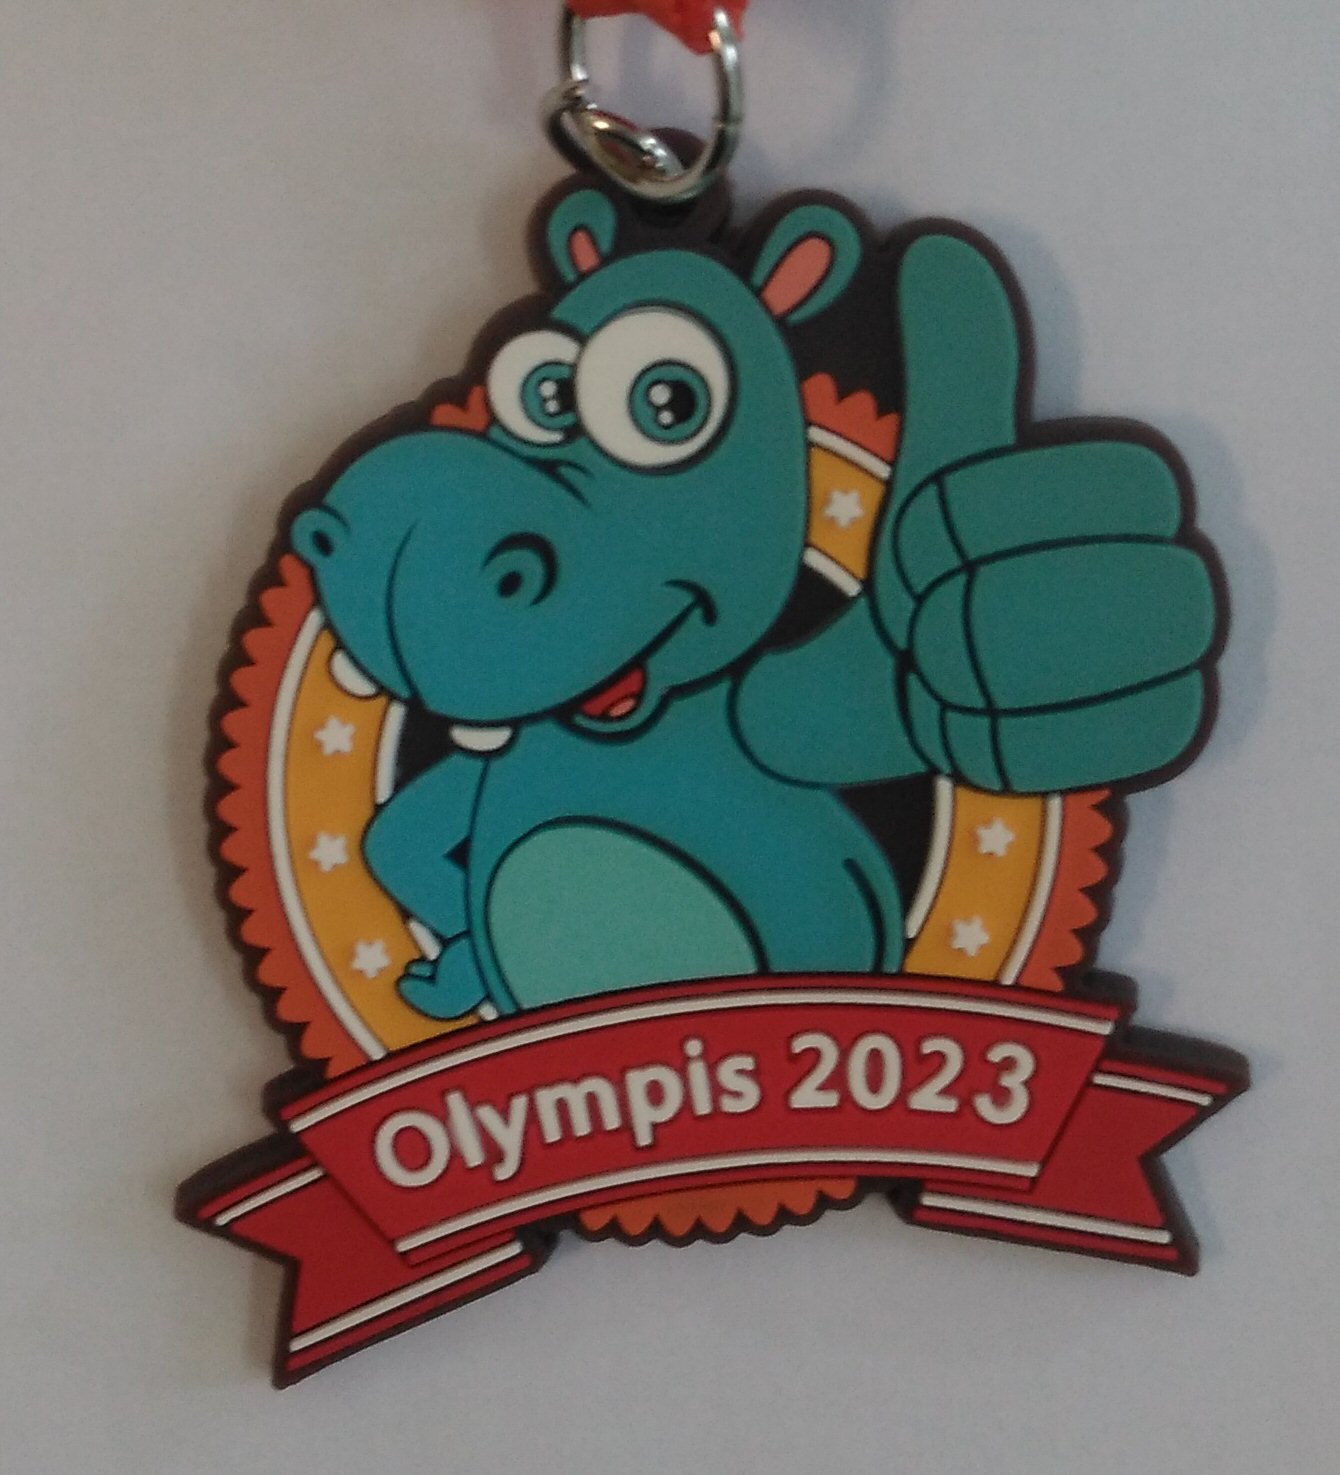 Olympis-medalis